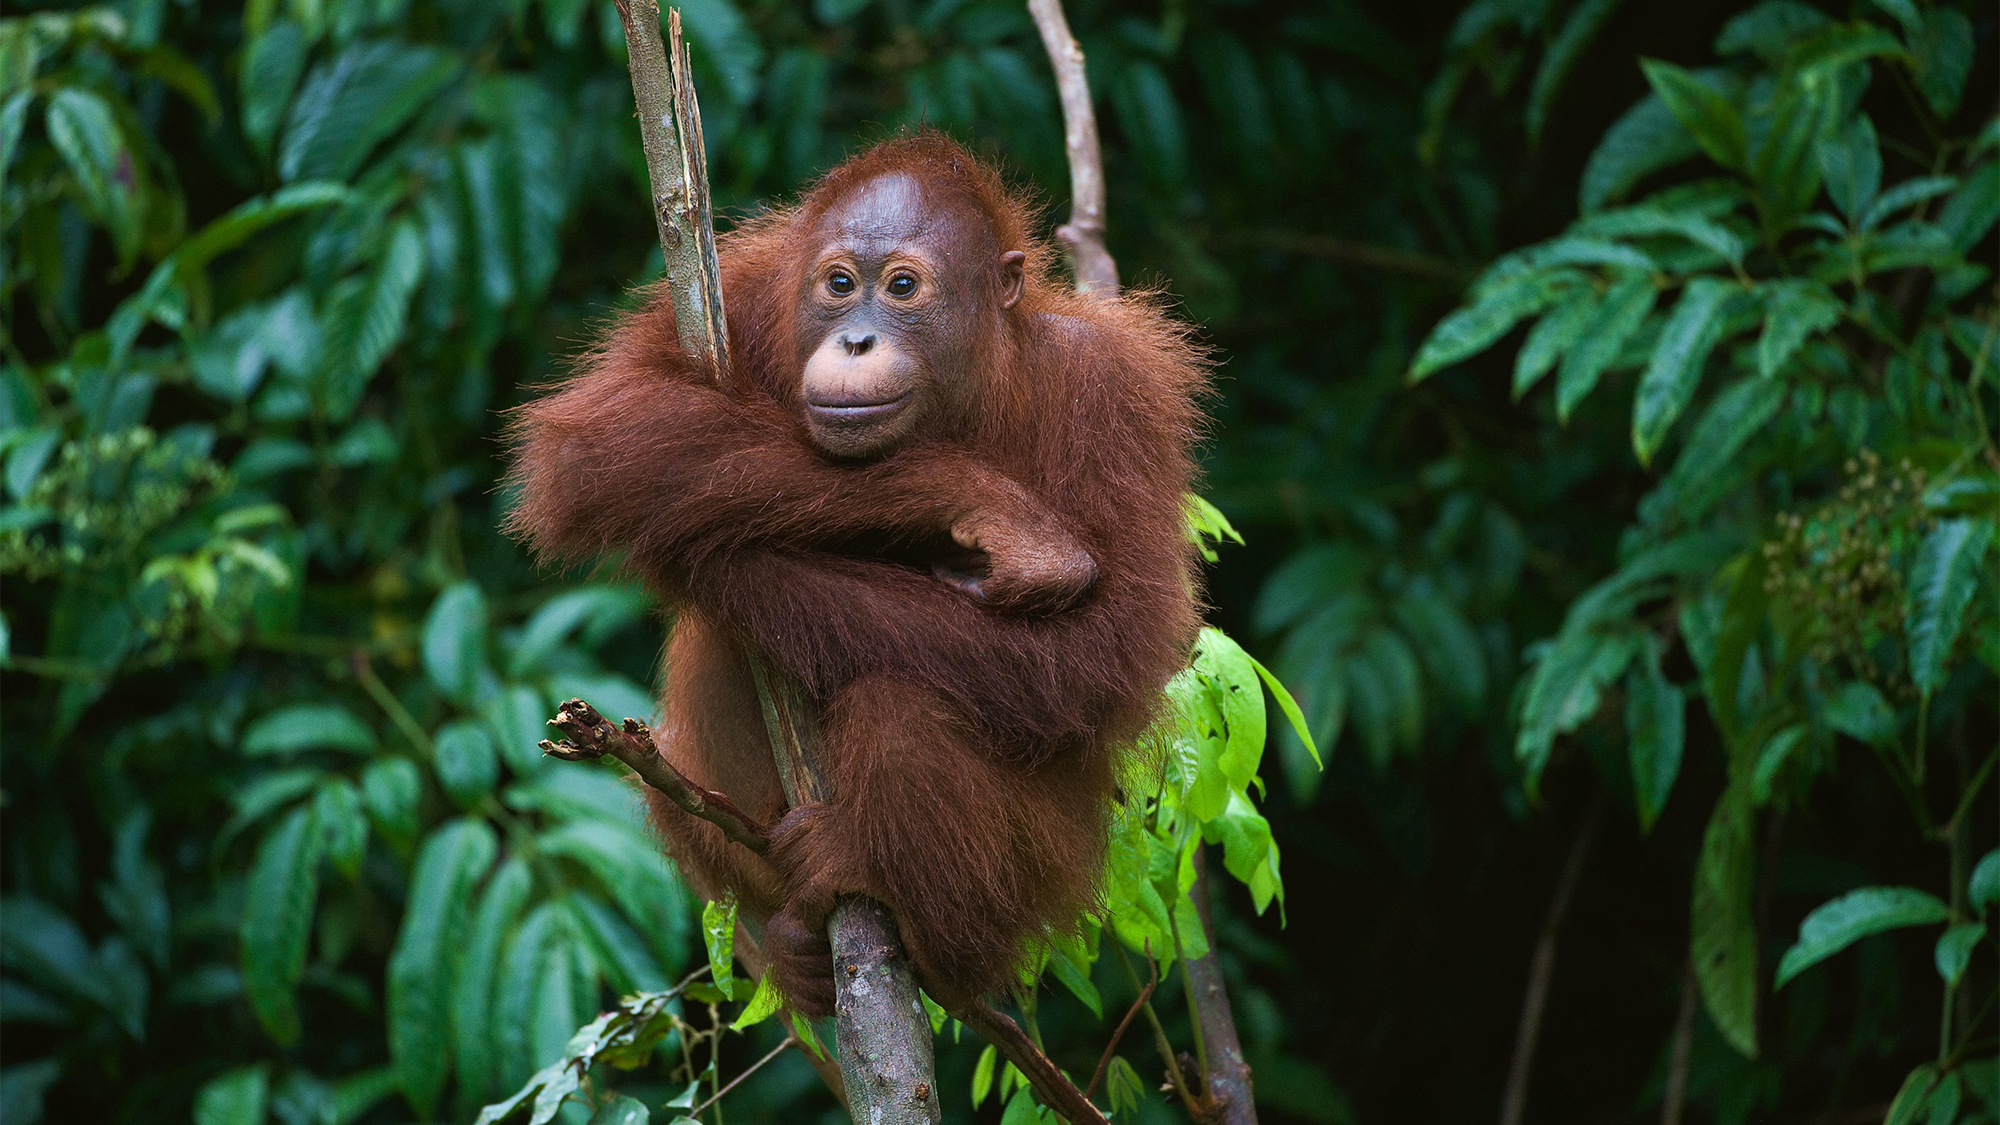 A young orangutan in a tree.